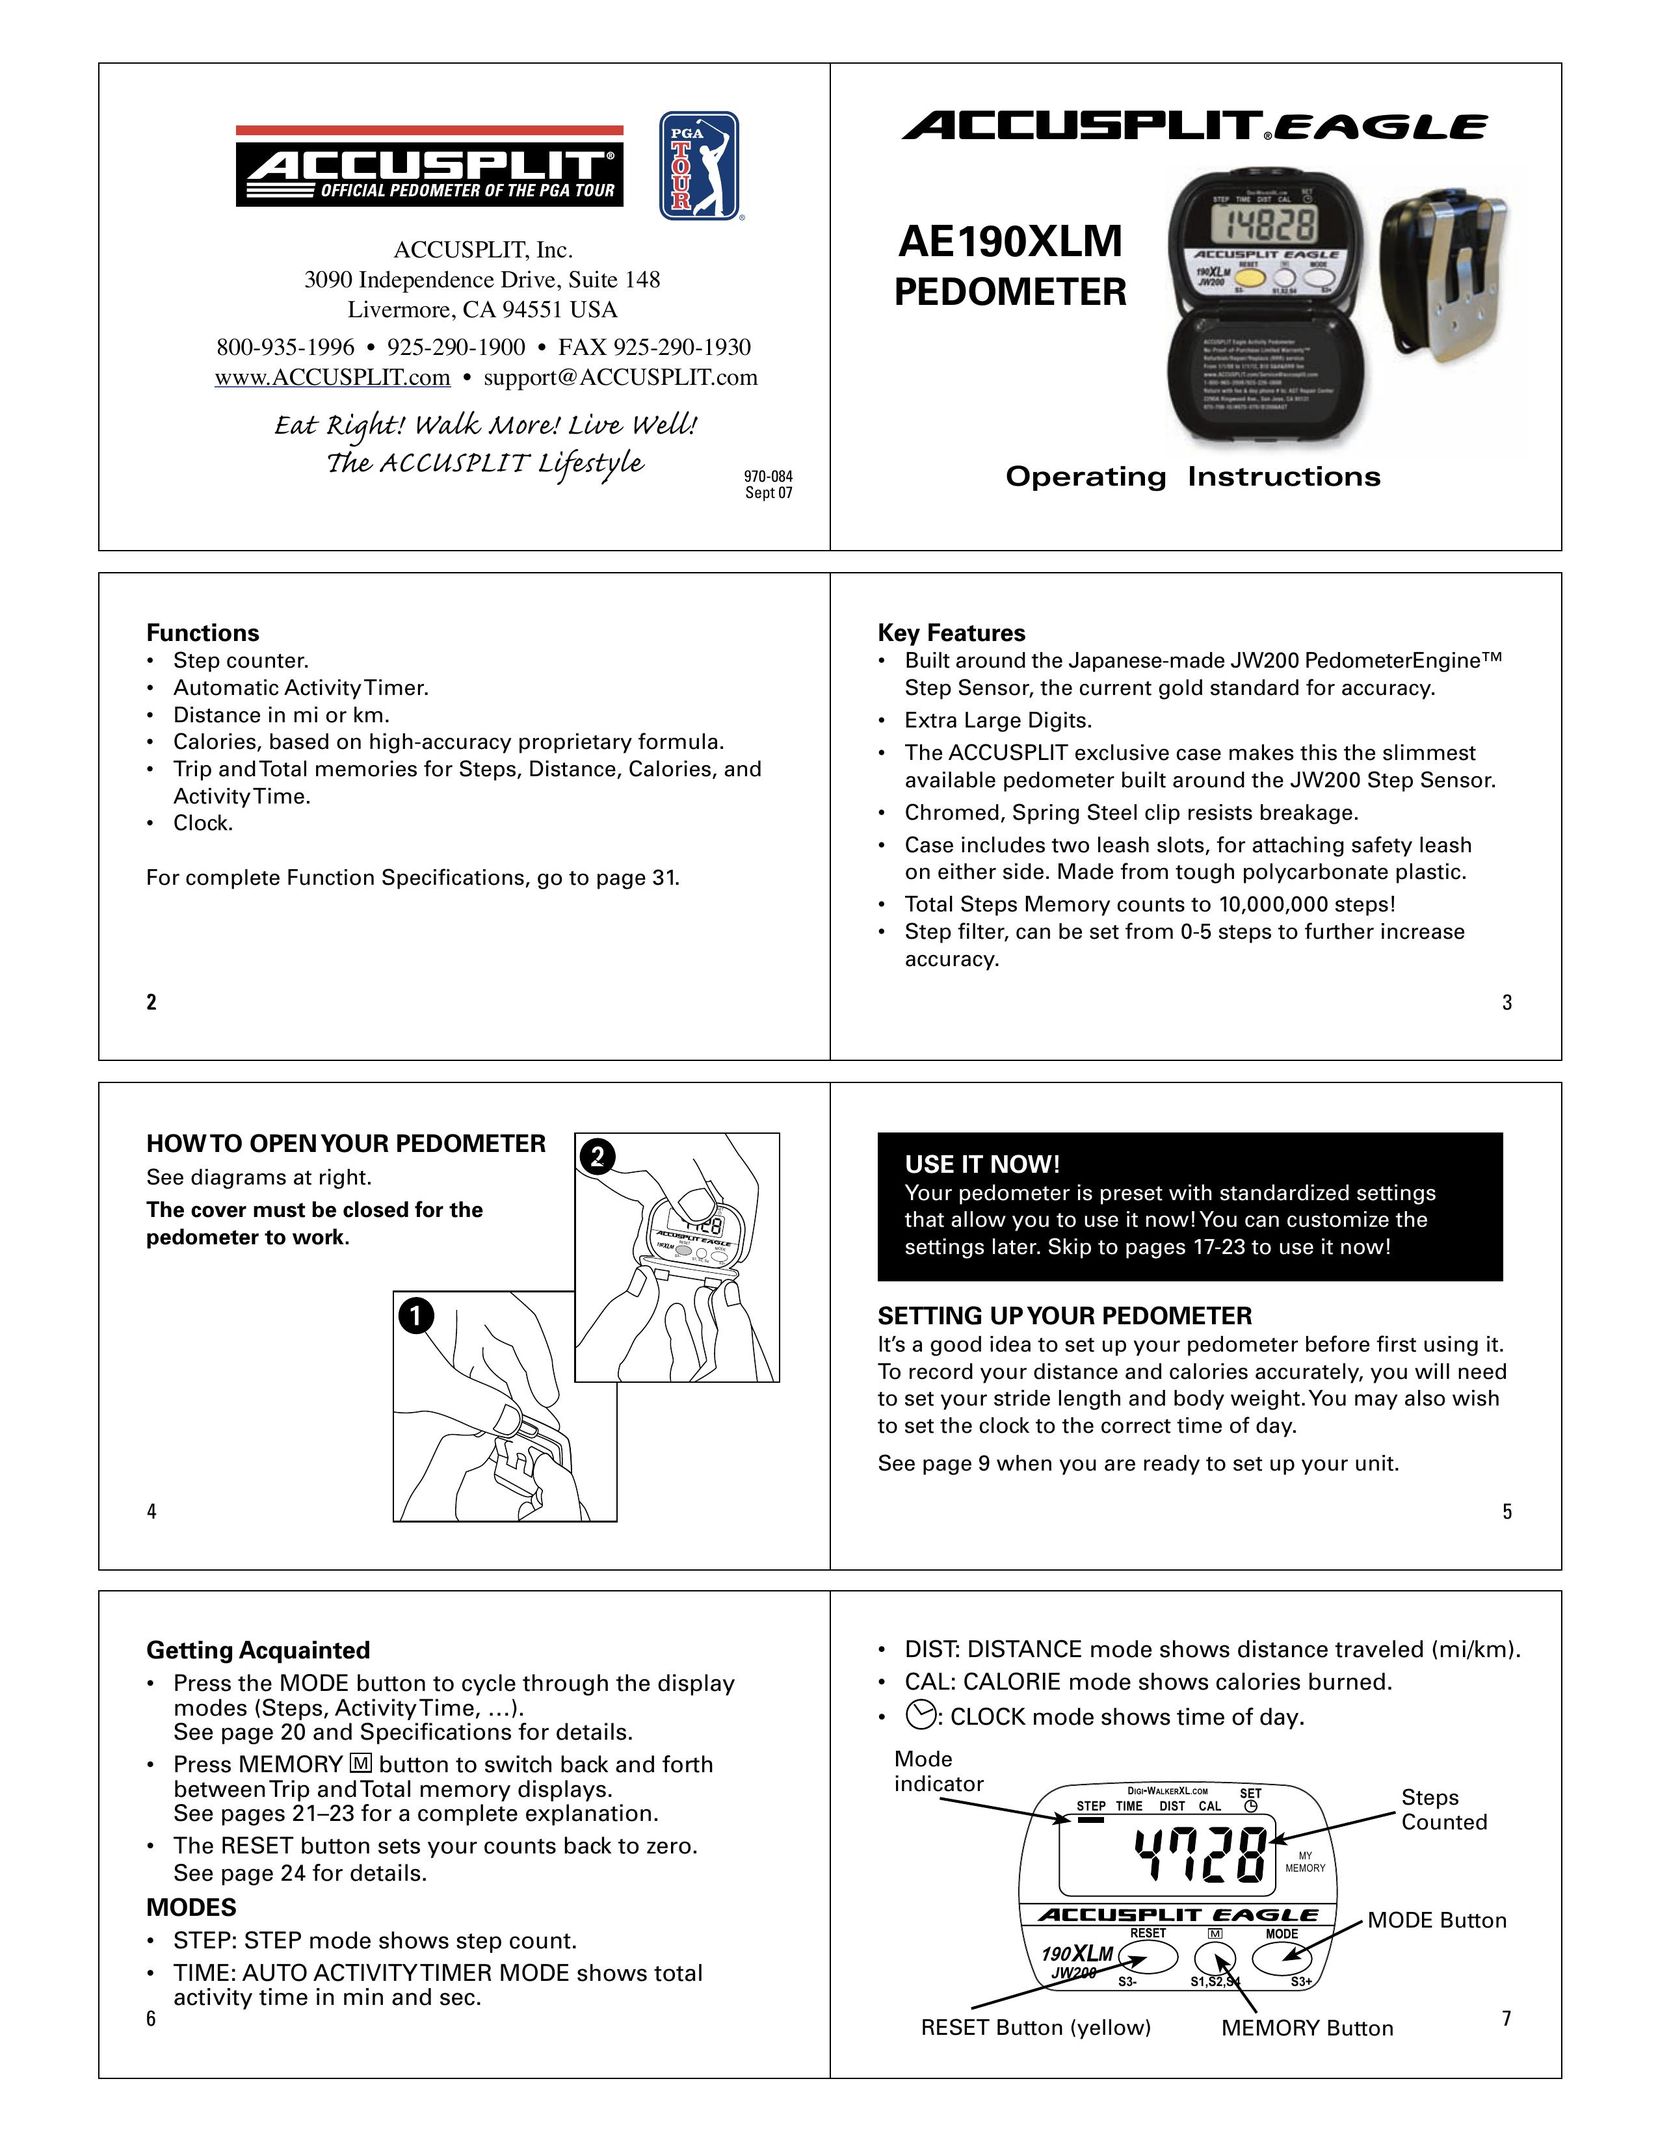 Accusplit AE190XLM Fitness Electronics User Manual